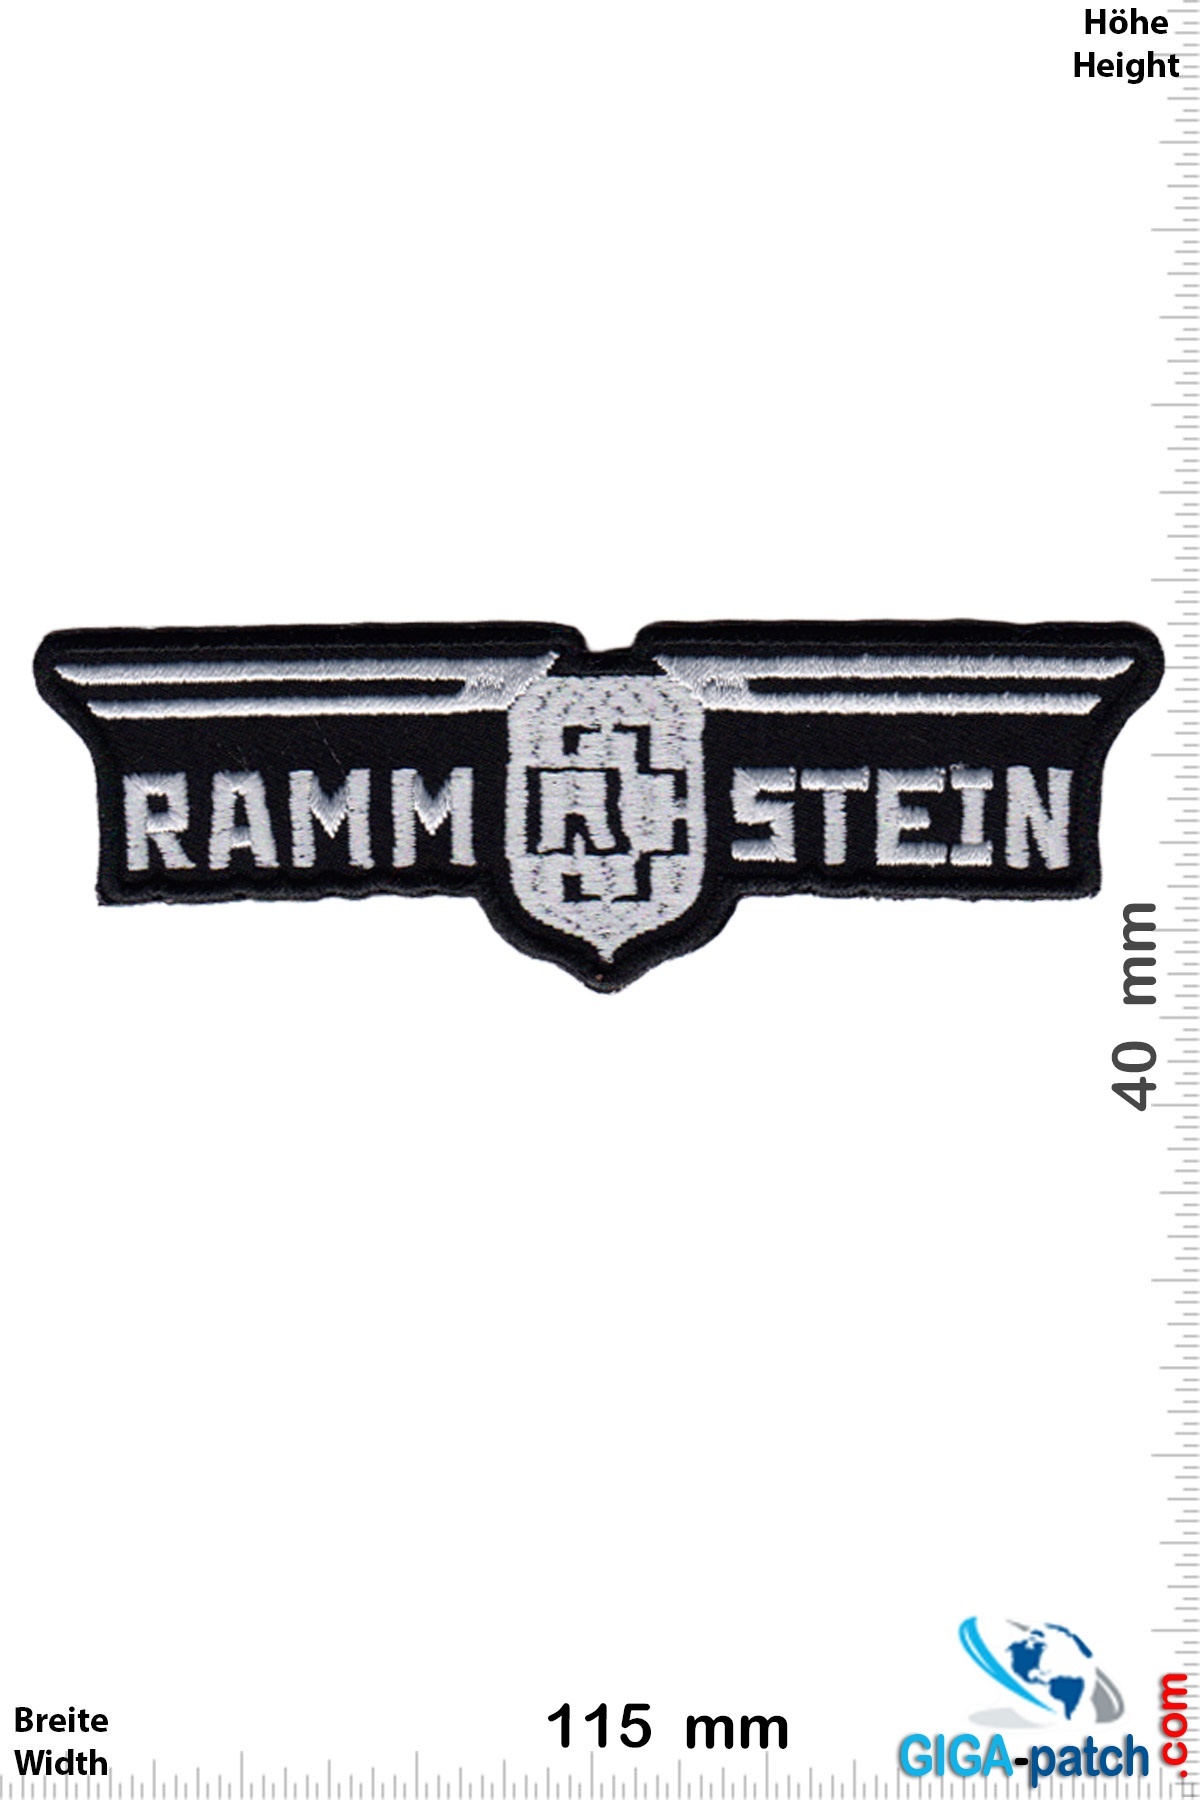 Rammstein - Rammstein - silber - Patch- Aufnäher - Aufnäher Shop / Patch -  Shop - größter weltweit - Patch Aufnäher Schlüsselanhänger Aufkleber